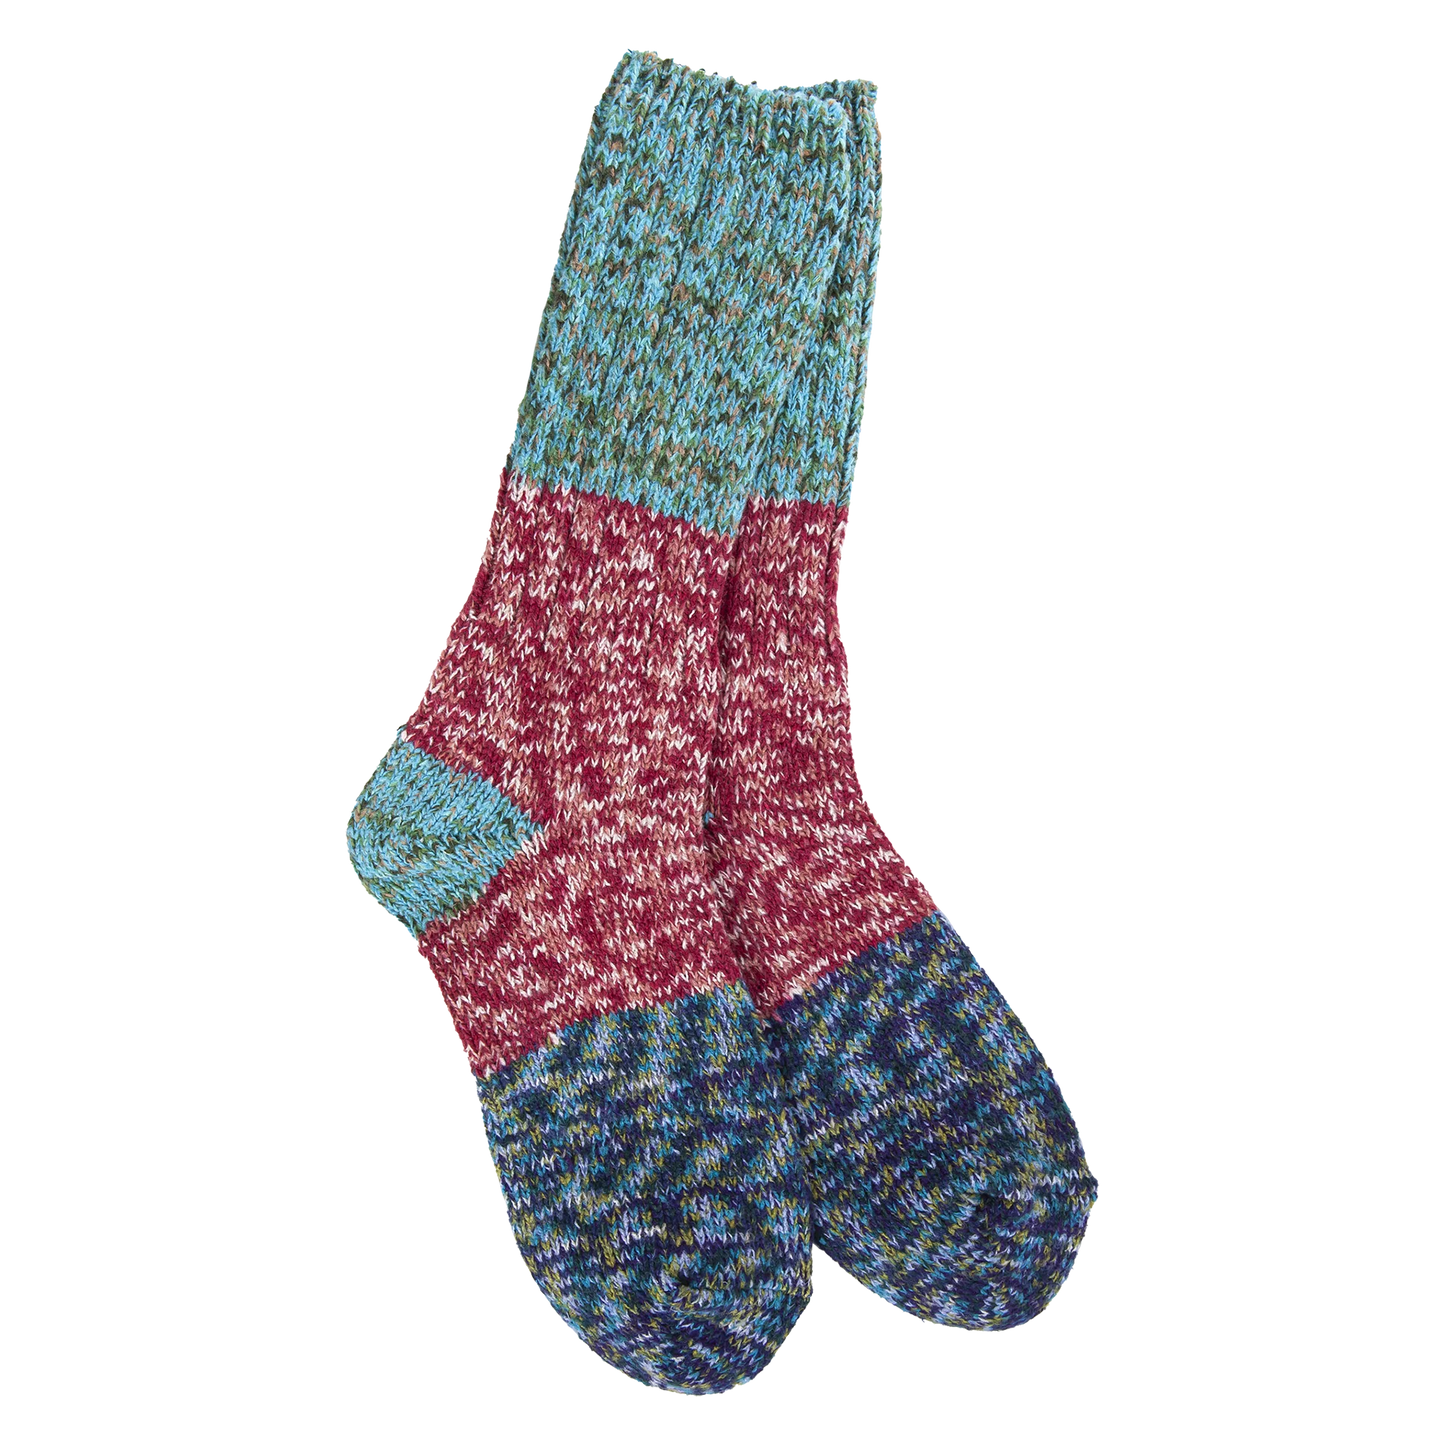 Worlds Softest Socks (Women's)